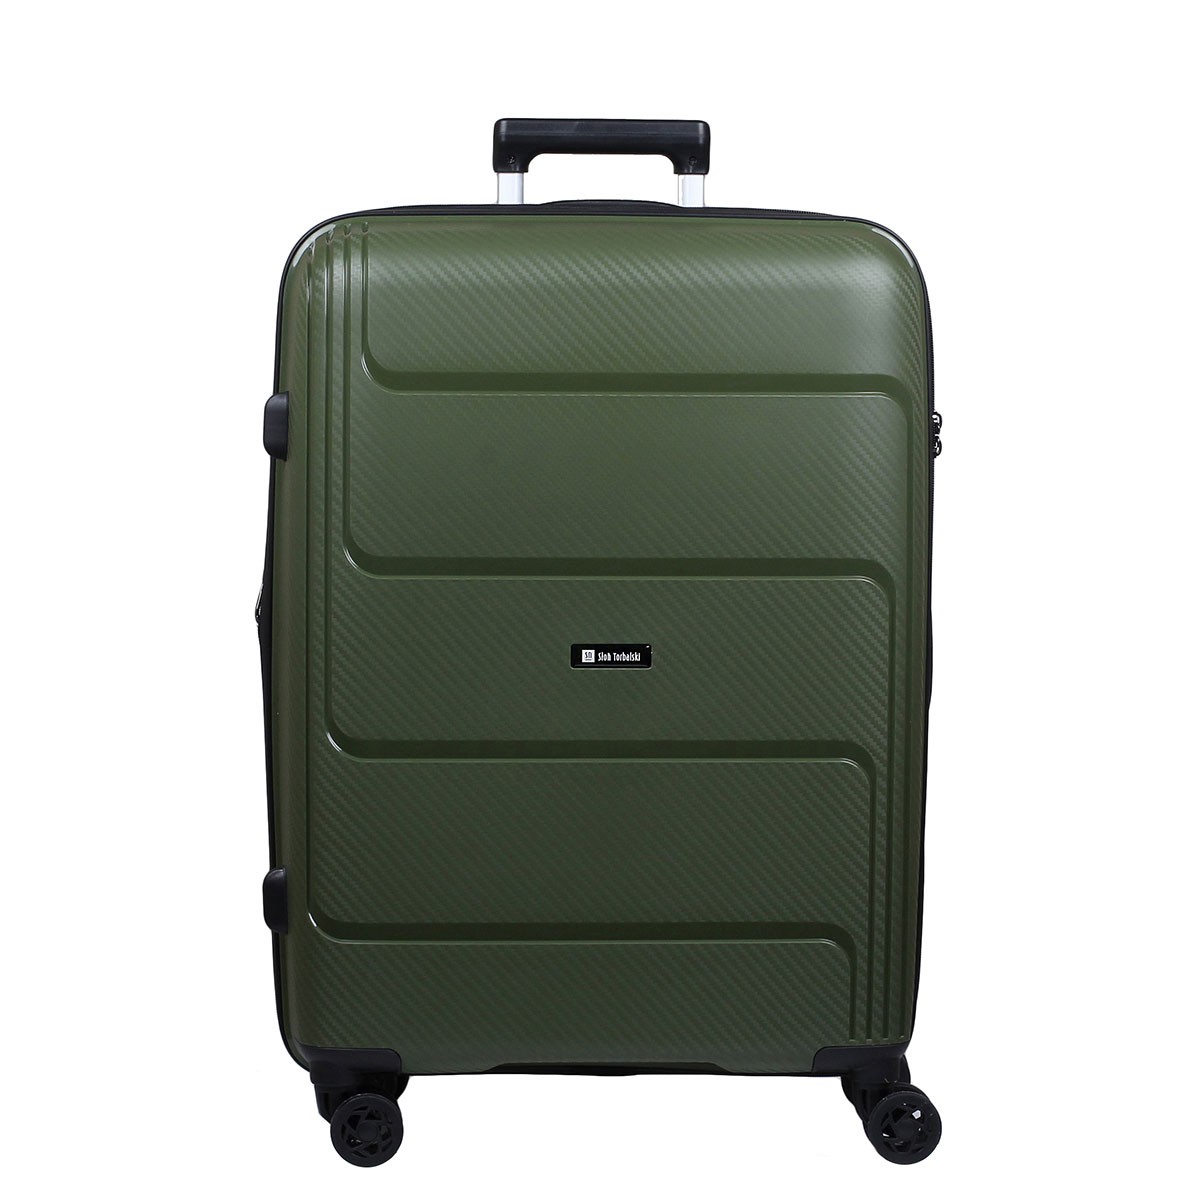 zielona-walizka-srednia-poszerzana-hard-class-polipropylen-04-0211O-07.jpg